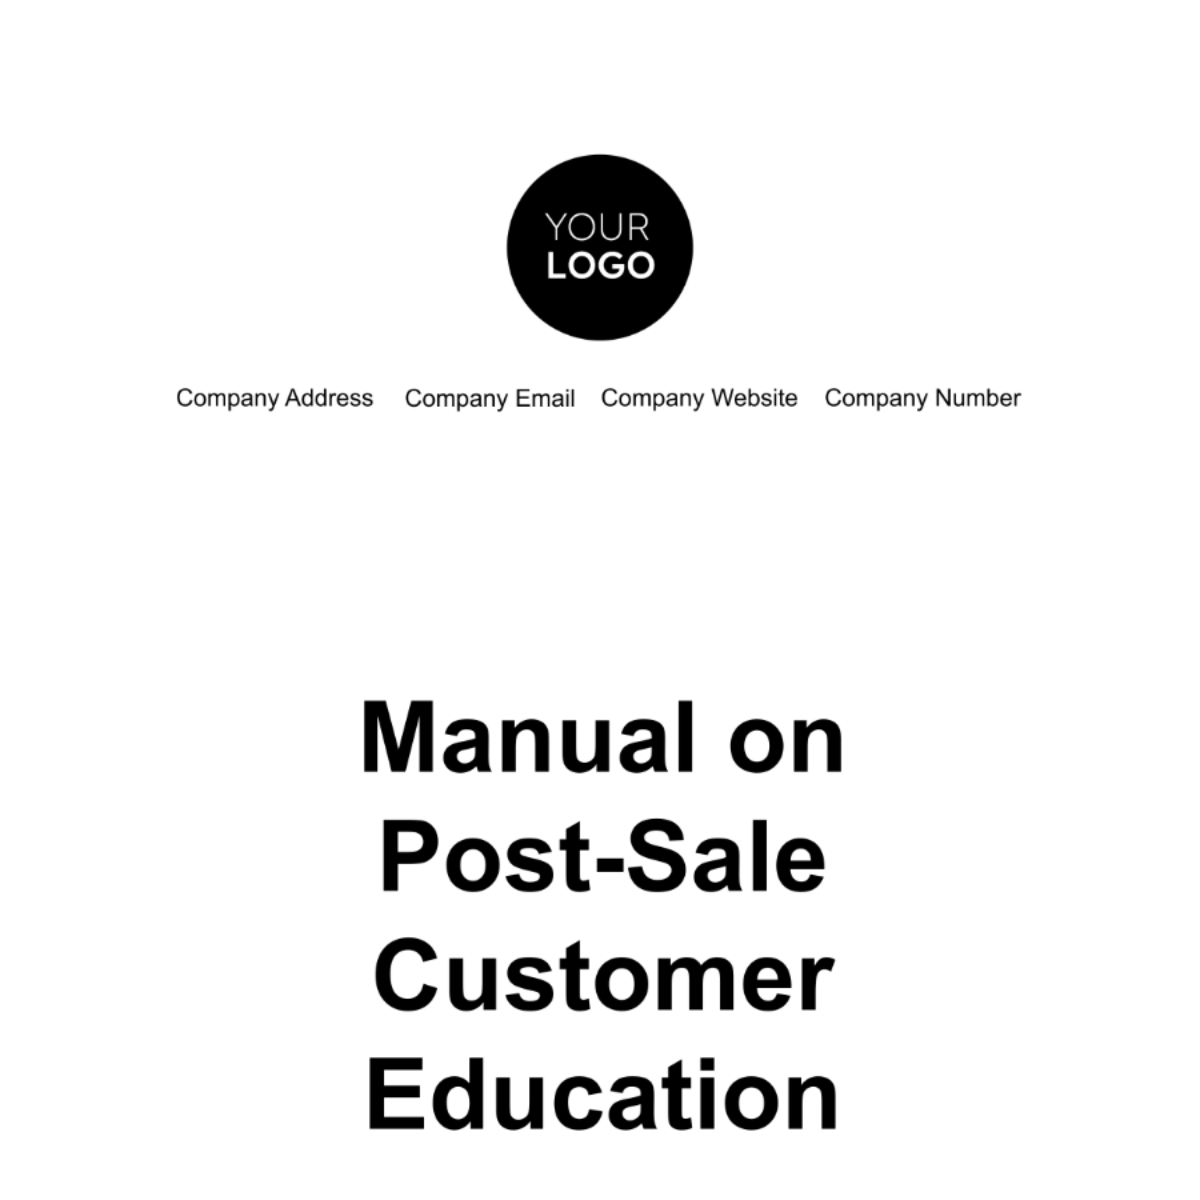 Manual on Post-Sale Customer Education Template